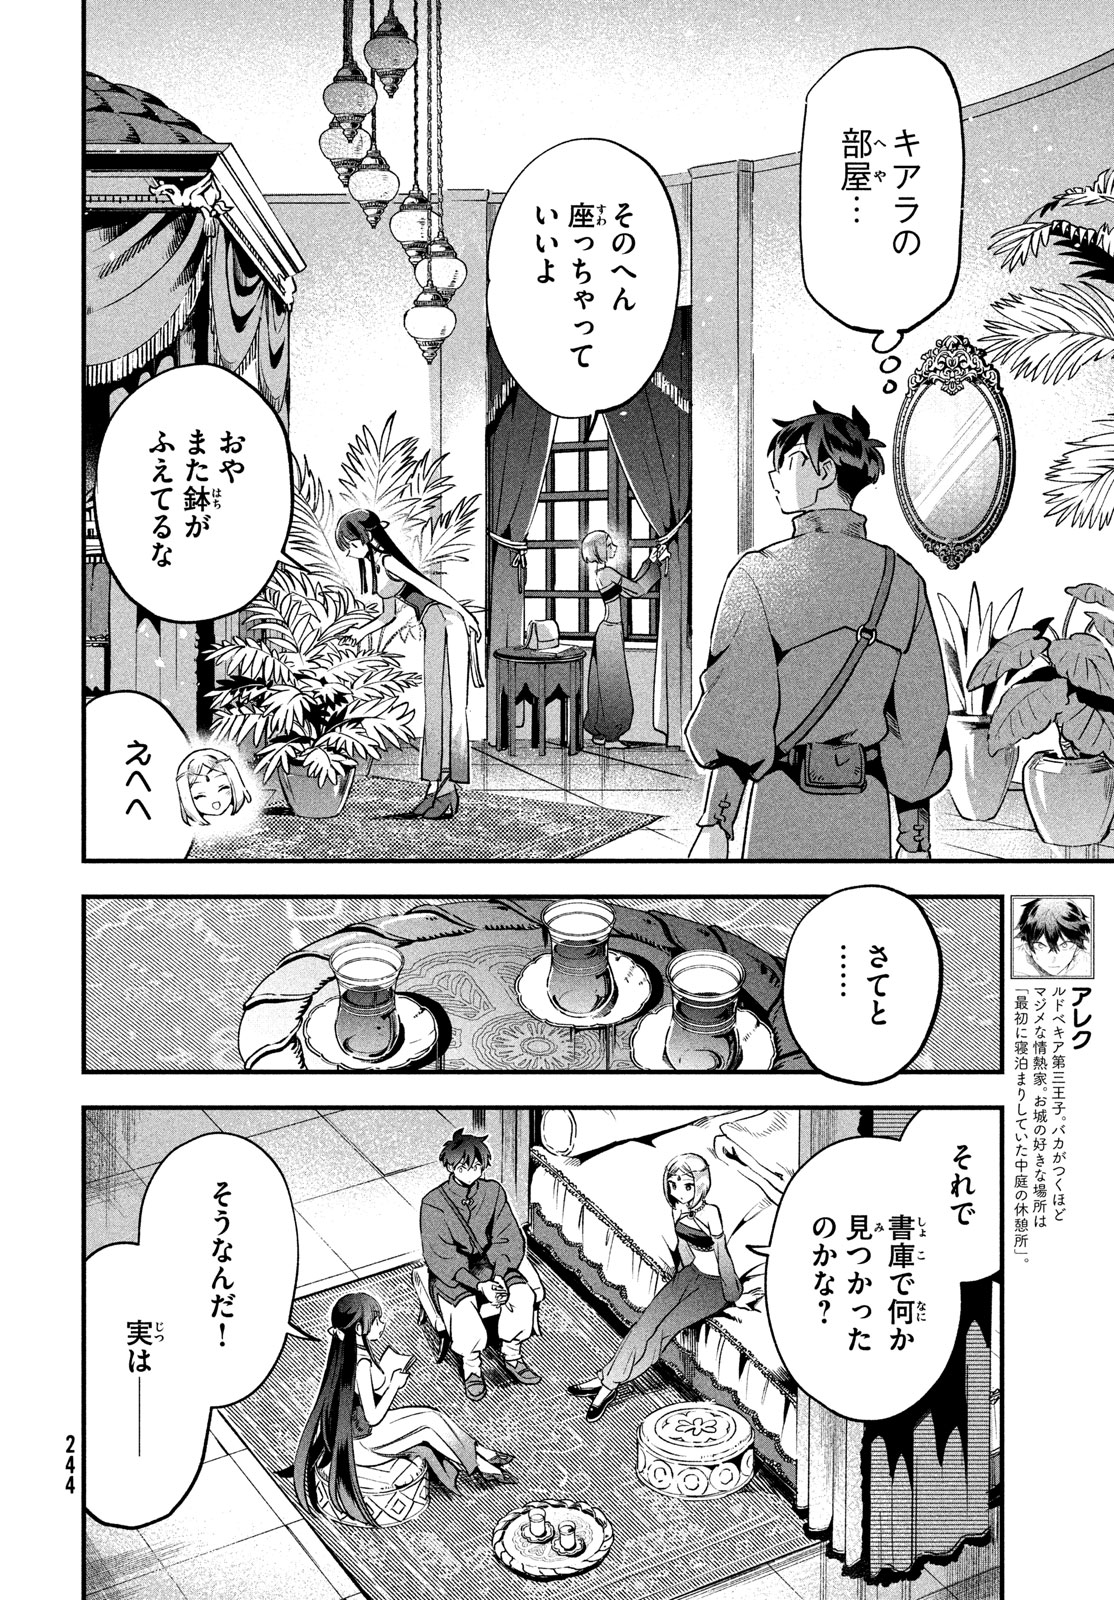 7-nin no Nemuri Hime - Chapter 35 - Page 2